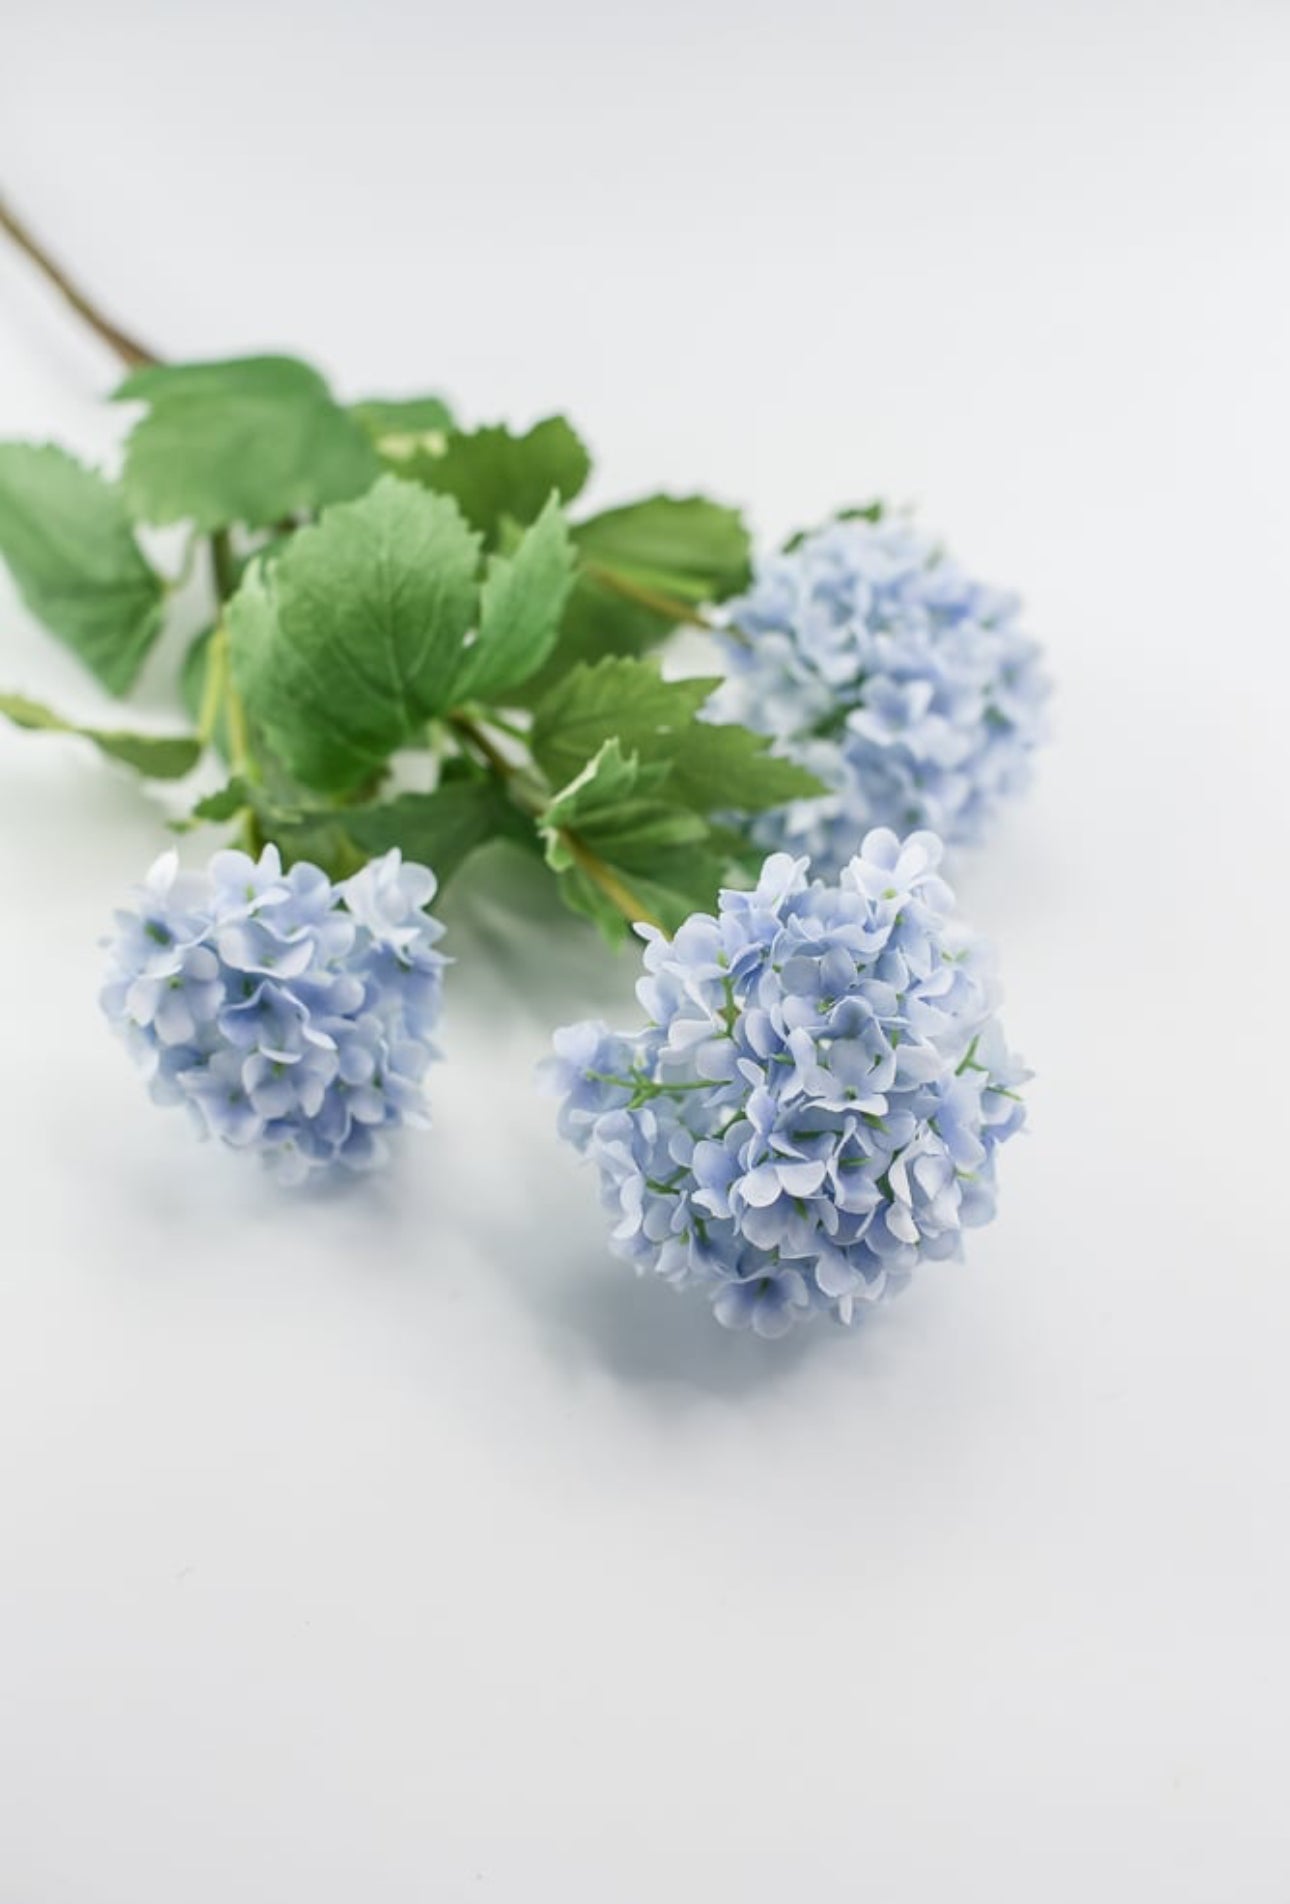 Snowball hydrangea spray - light blue - Greenery Market2255078LB